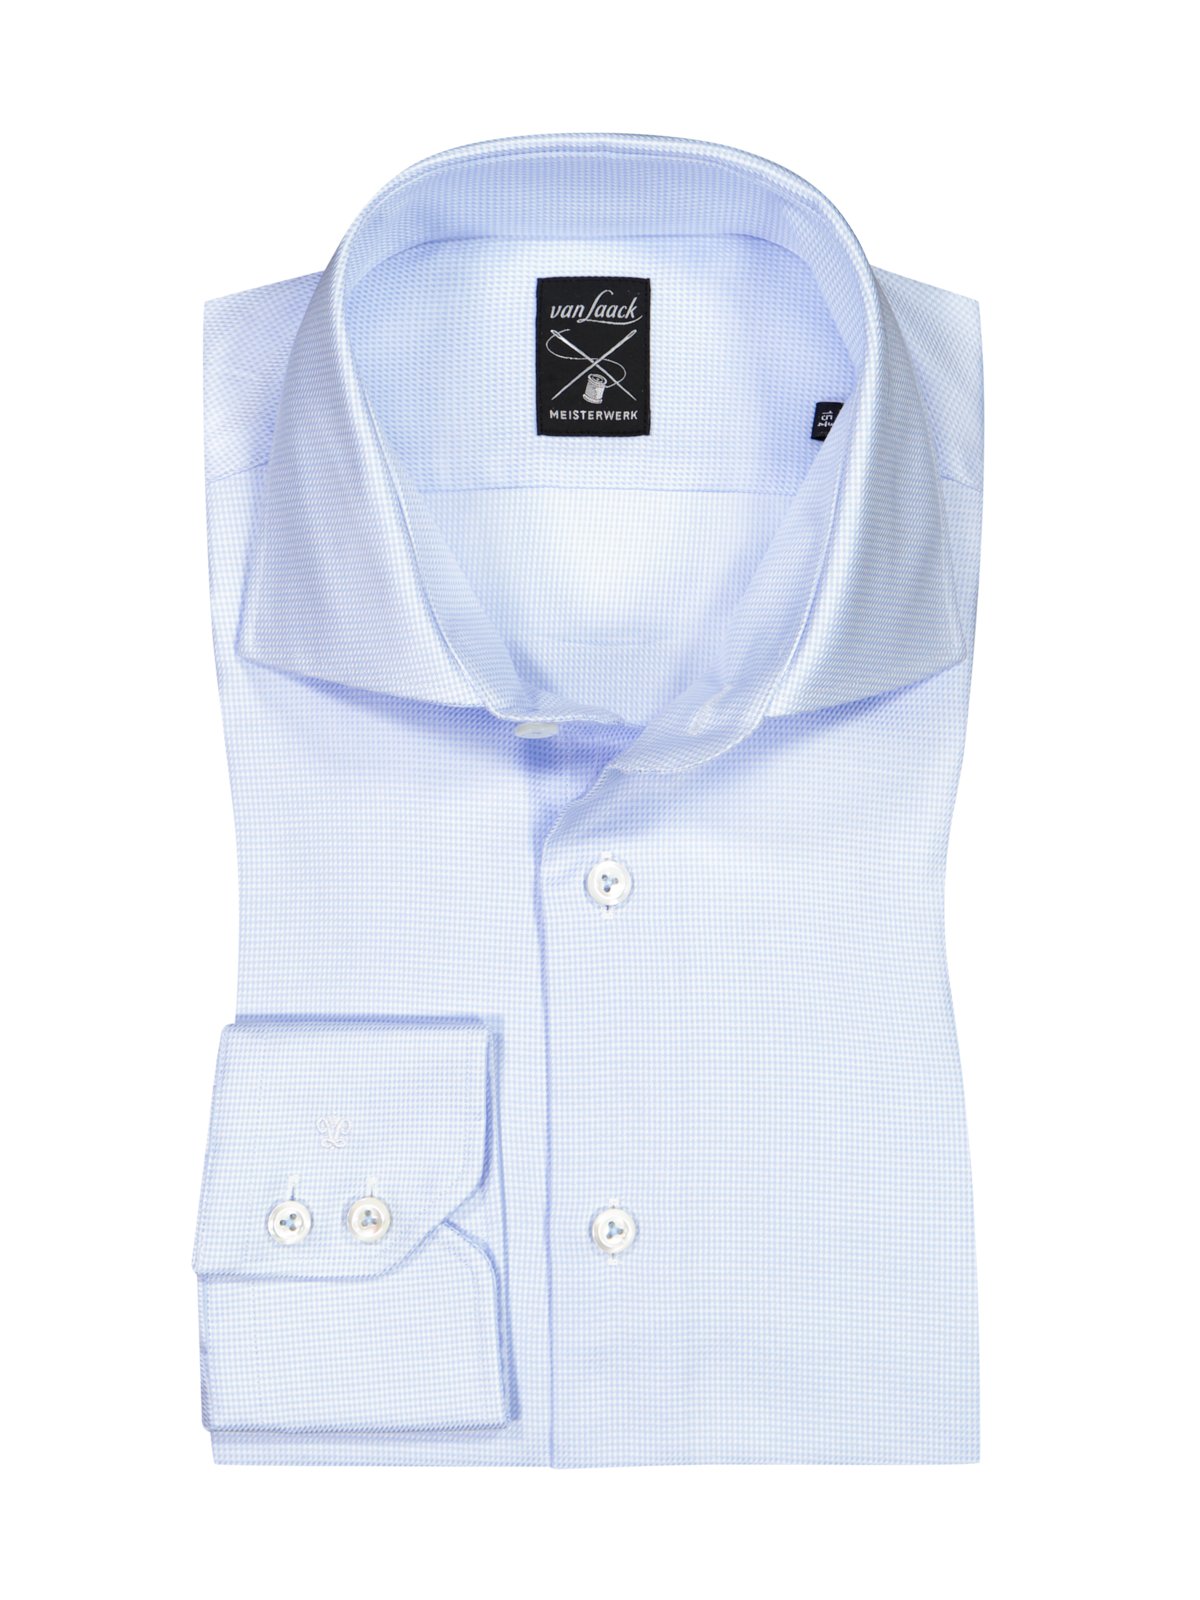 Van Laack Hemd aus Baumwolle mit filigranem Muster, Tailored Fit